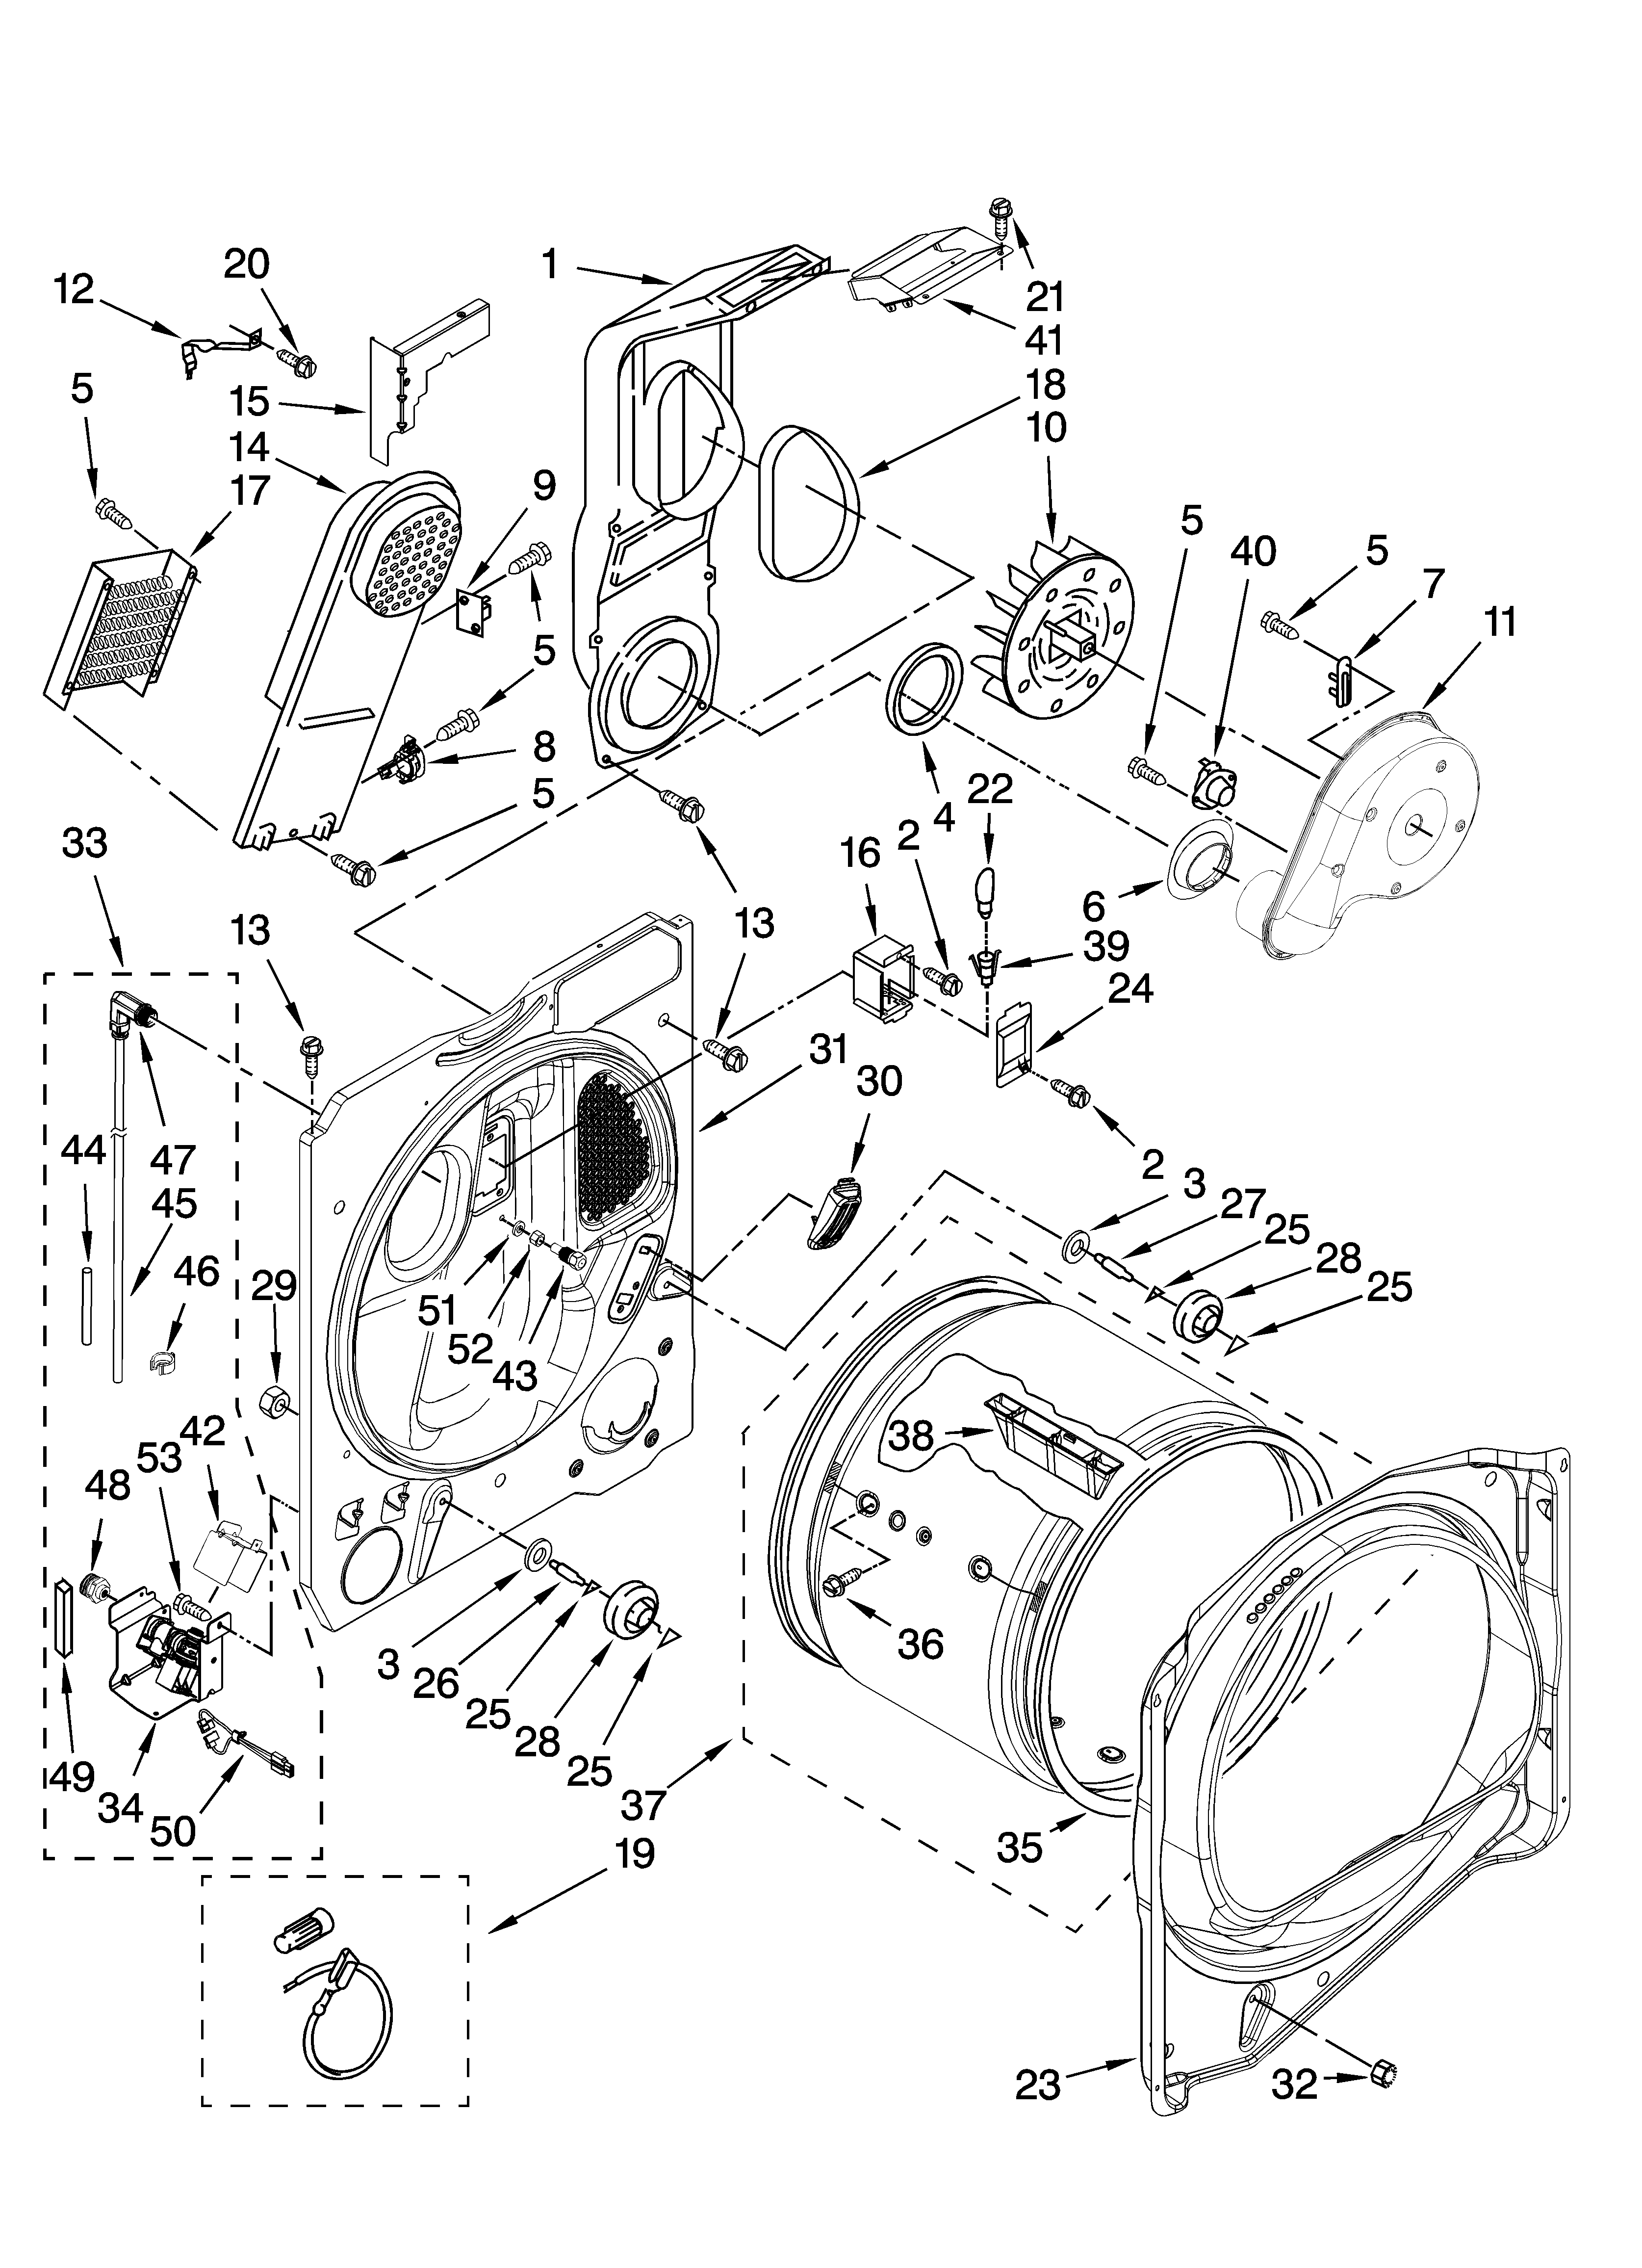 Whirlpool Refrigerator Parts Diagram Whirlpool Dryer Sensor Wiring Diagram Daily Update Wiring Diagram